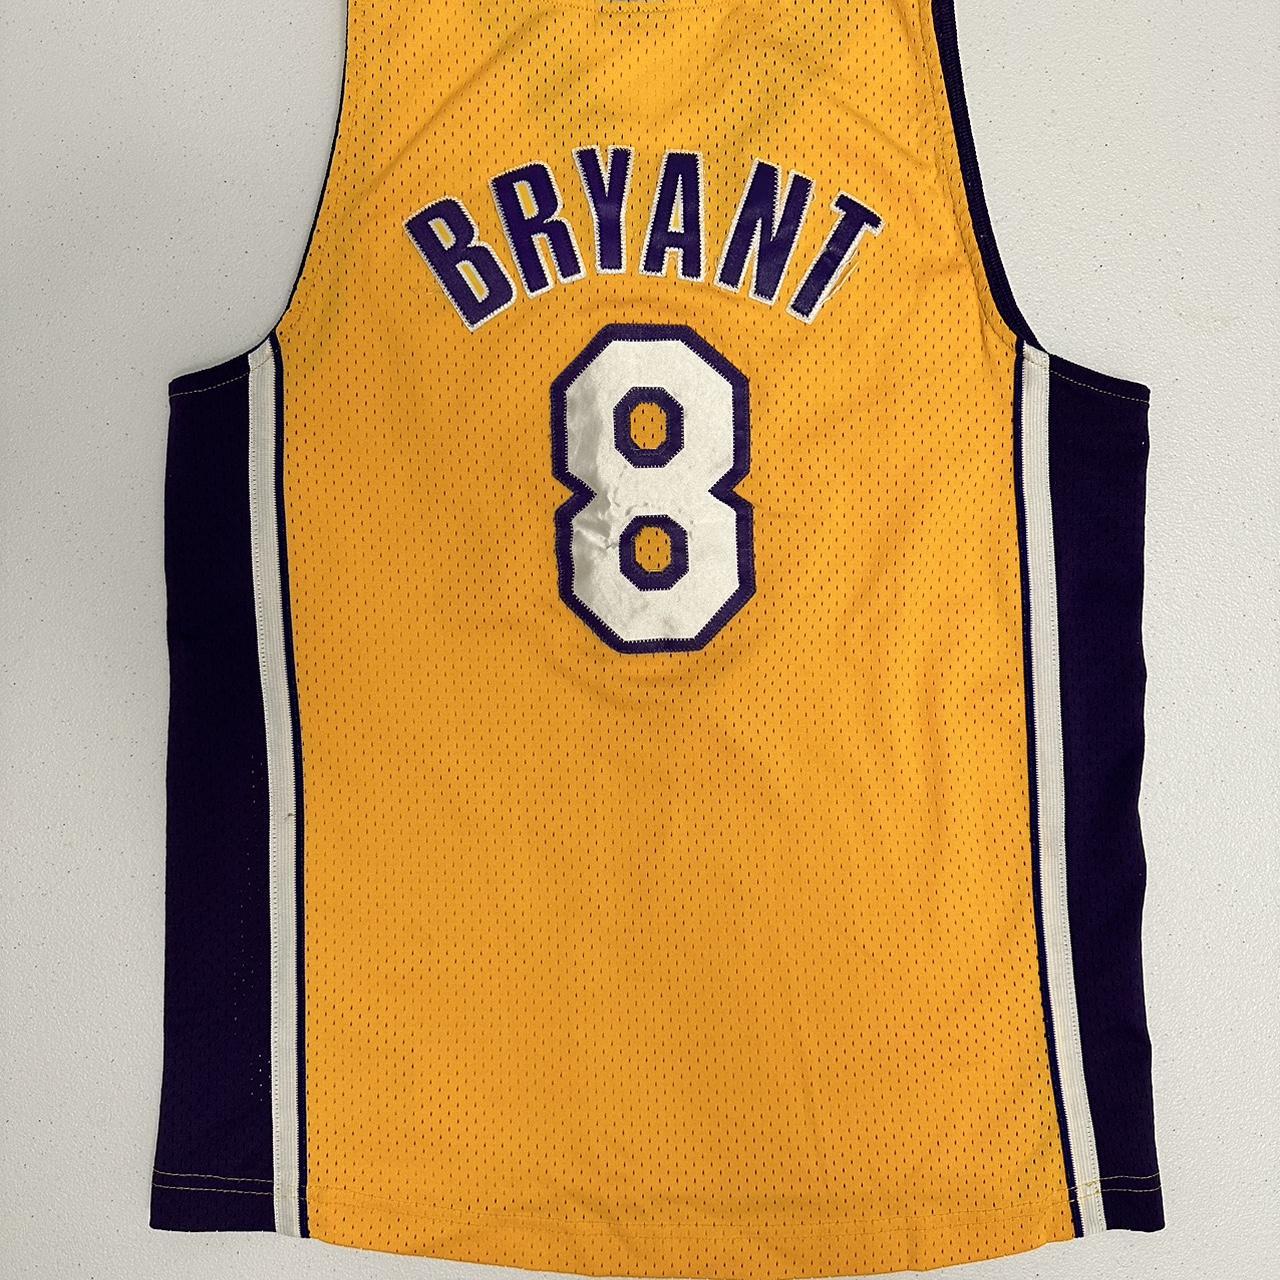 Kobe Bryant number 8 jersey by Nike. Great - Depop